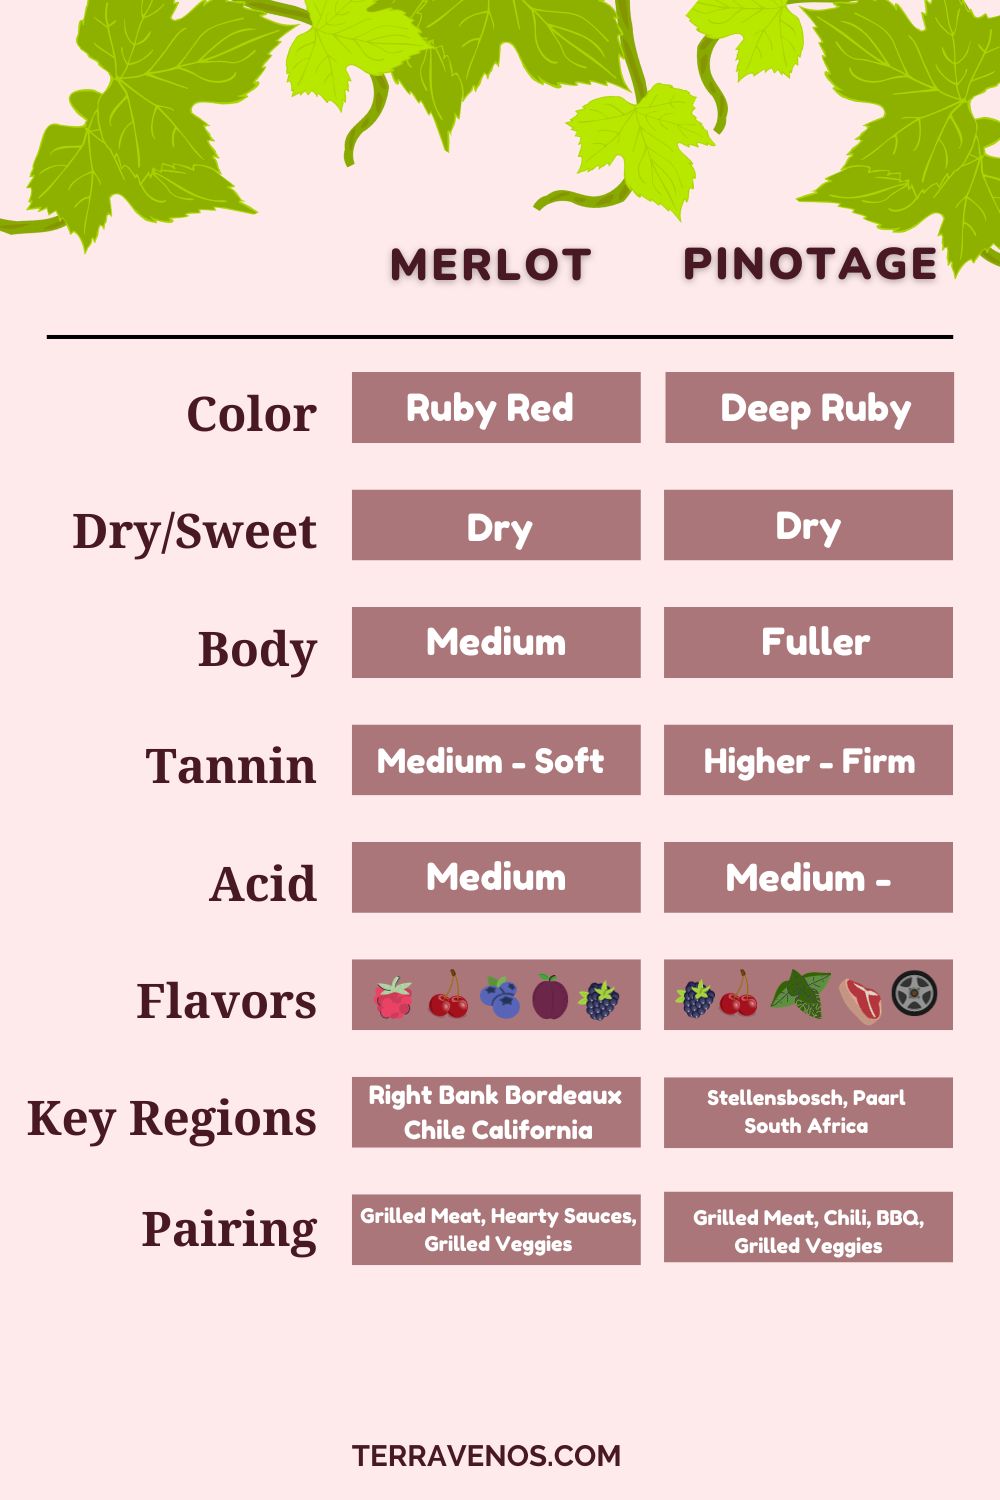 Pinotage-vs-merlot-comparison-wine-infographic